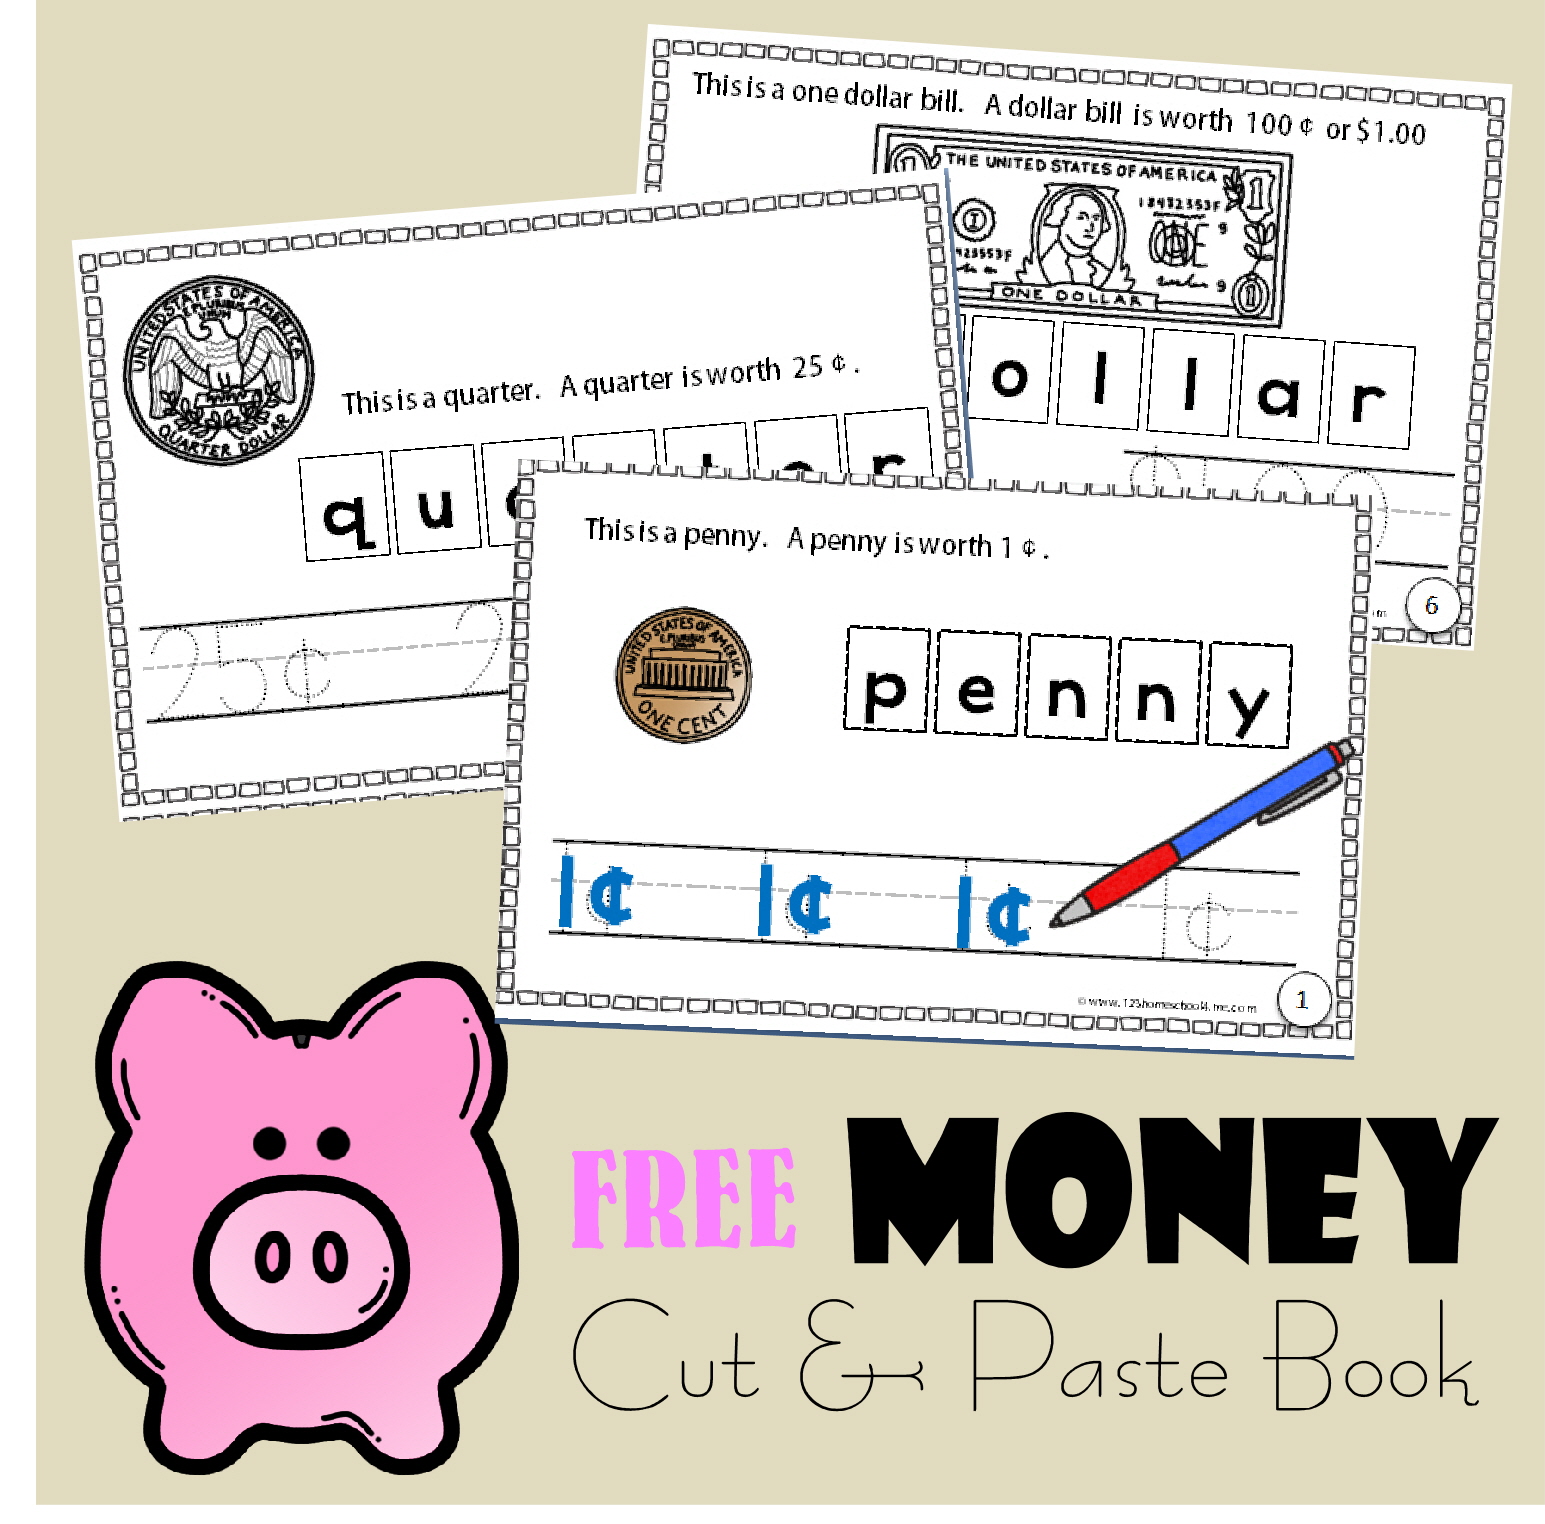 money-cut-and-paste-book-123-homeschool-4-me-error-404-123